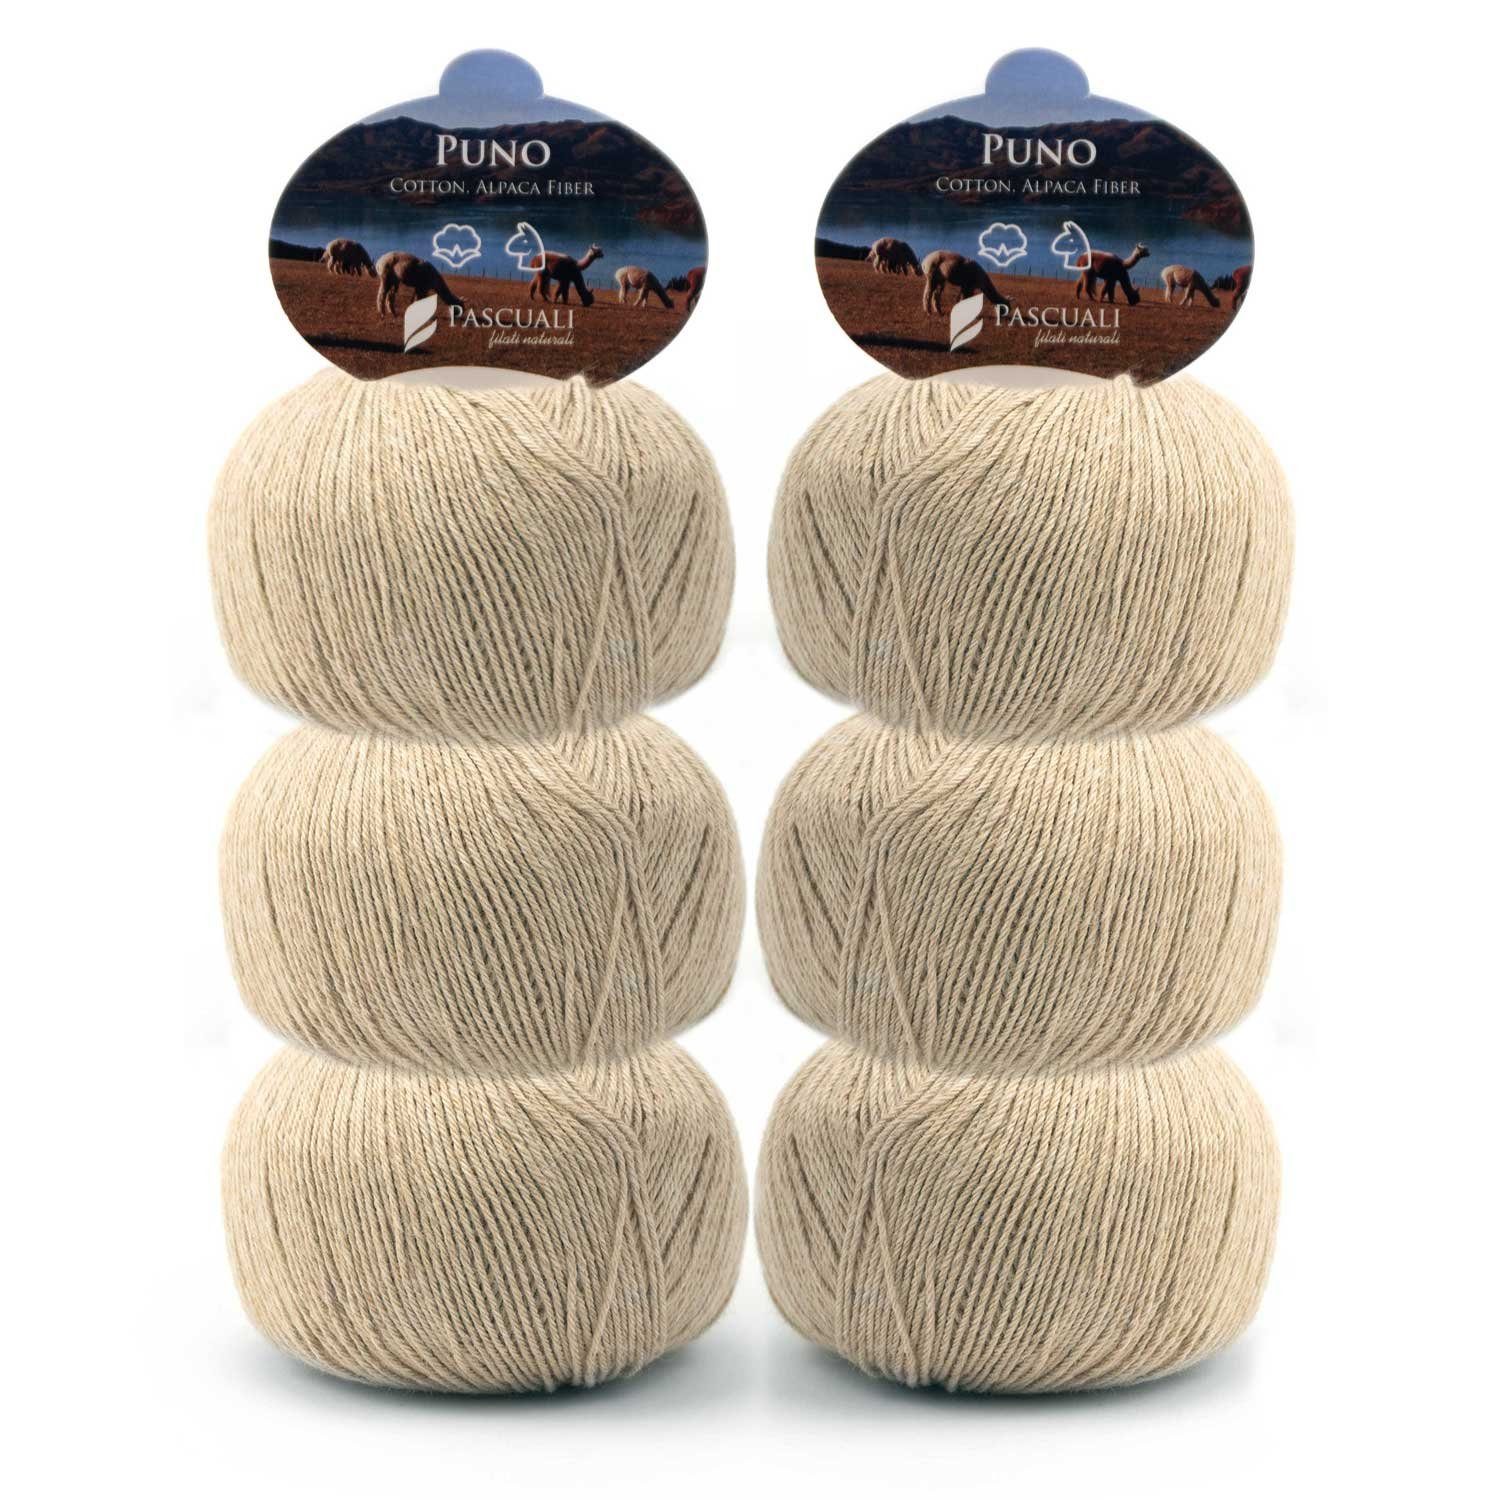 Pascuali 6 x 50g Pascuali Puno naturbelassen. Strickwolle aus 70% Baumwolle  (Bio), 30% Alpakawolle, Alpaca Wolle zum Stricken und Häkeln Häkelwolle